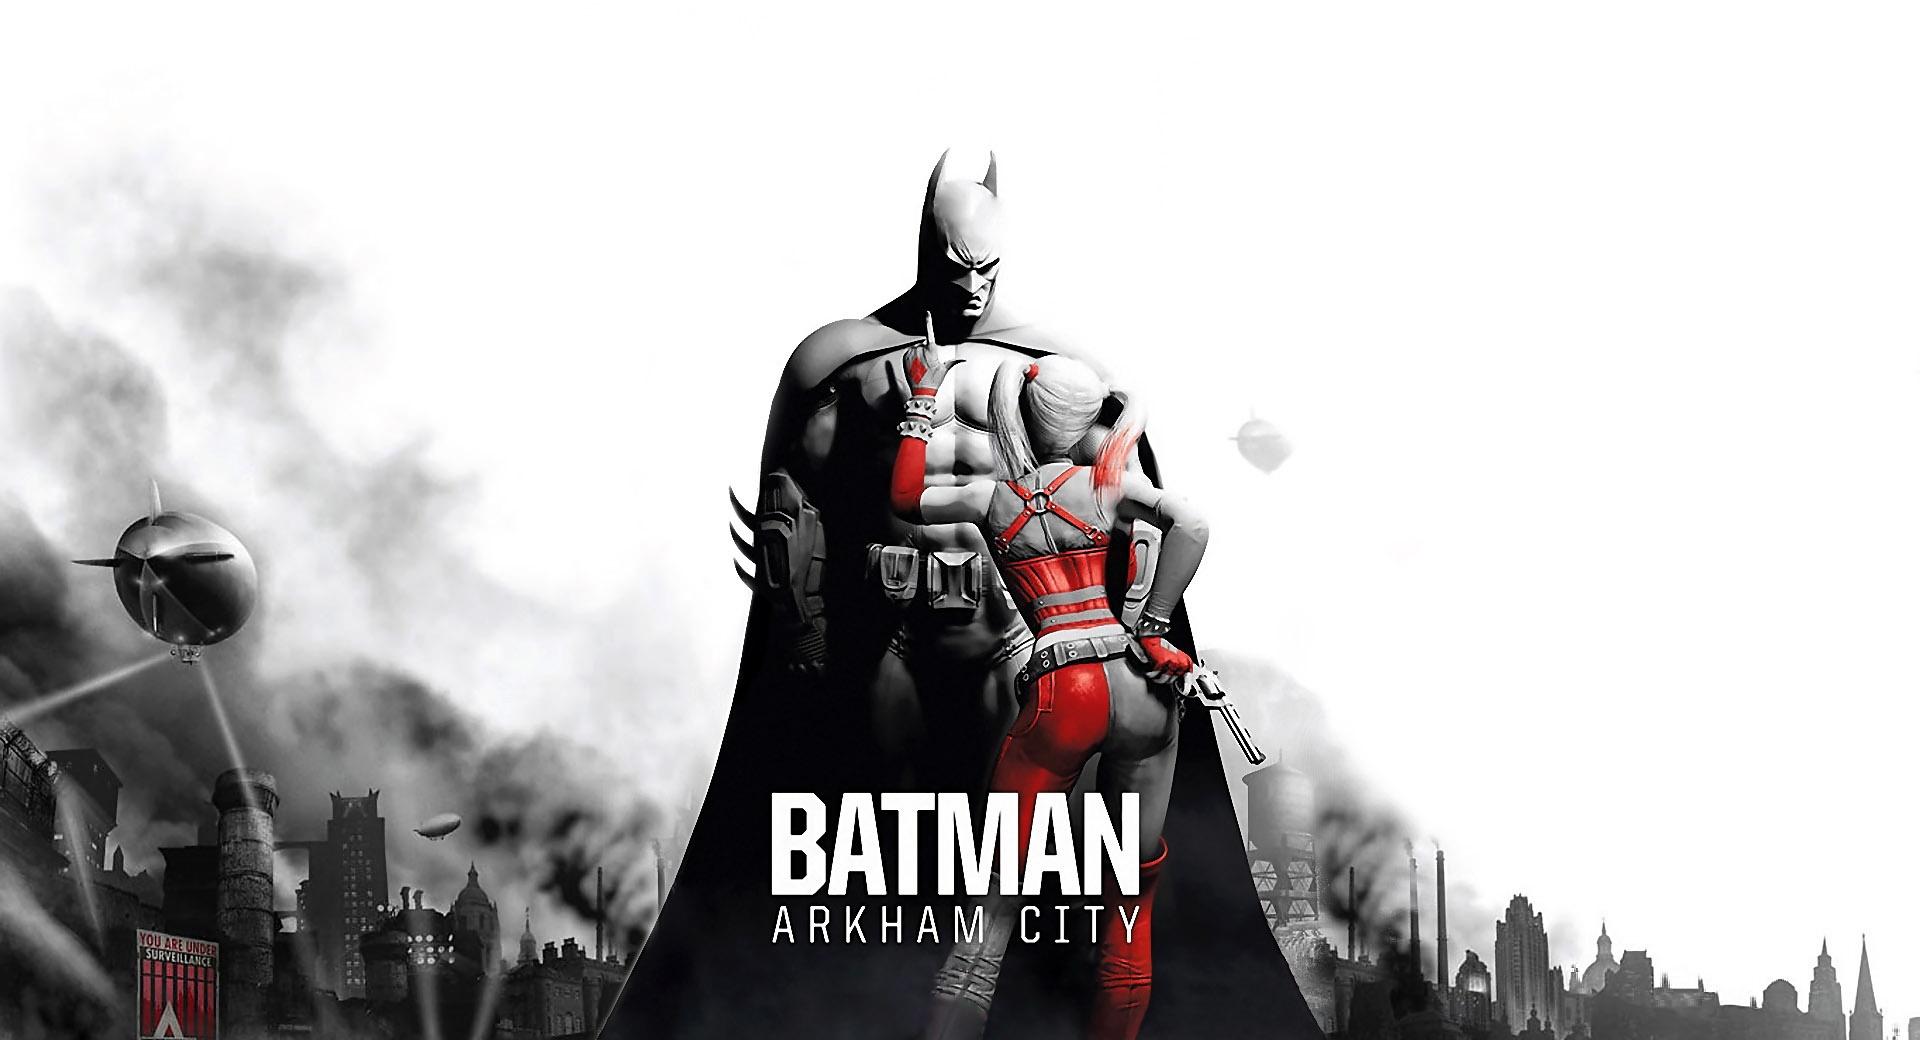 Batman Arkham City - Batman Harley at 320 x 480 iPhone size wallpapers HD quality